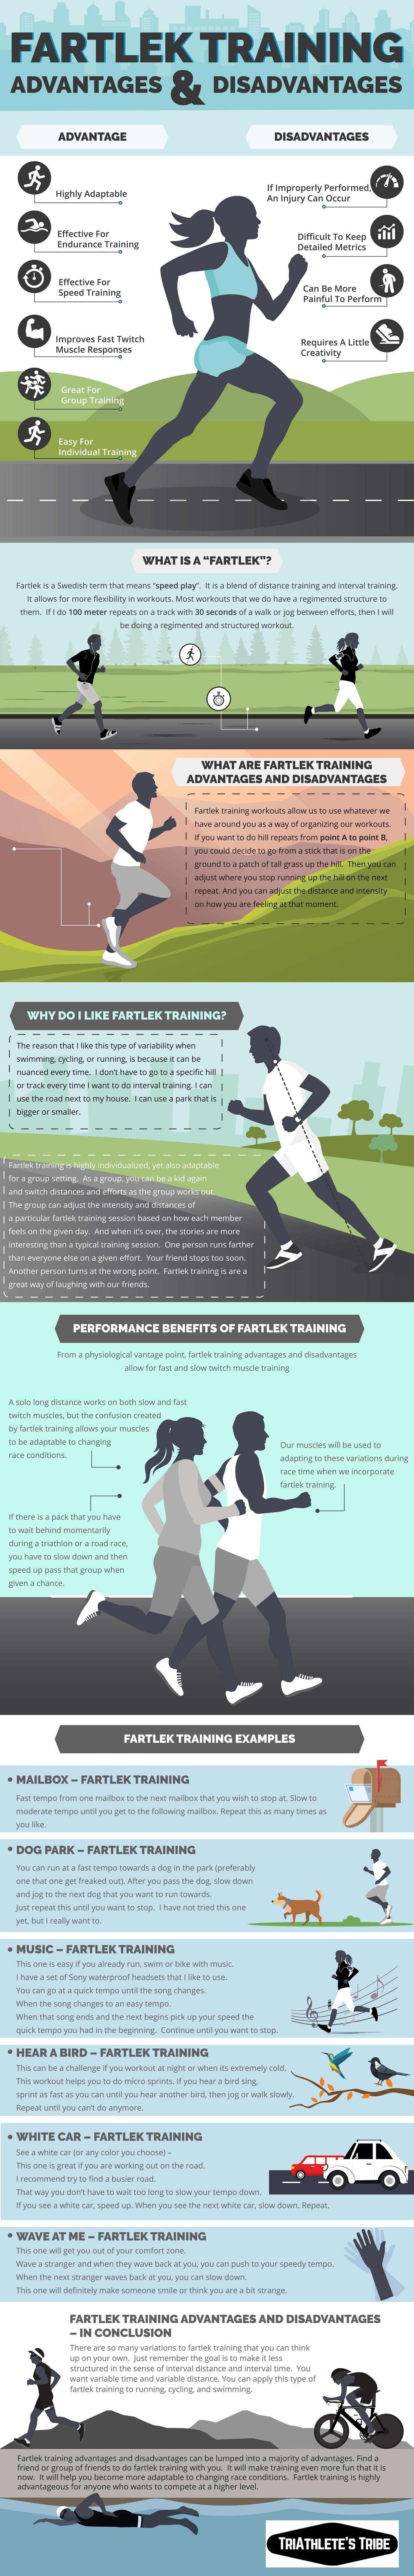 Fartlek Training Advantages and Disadvantages